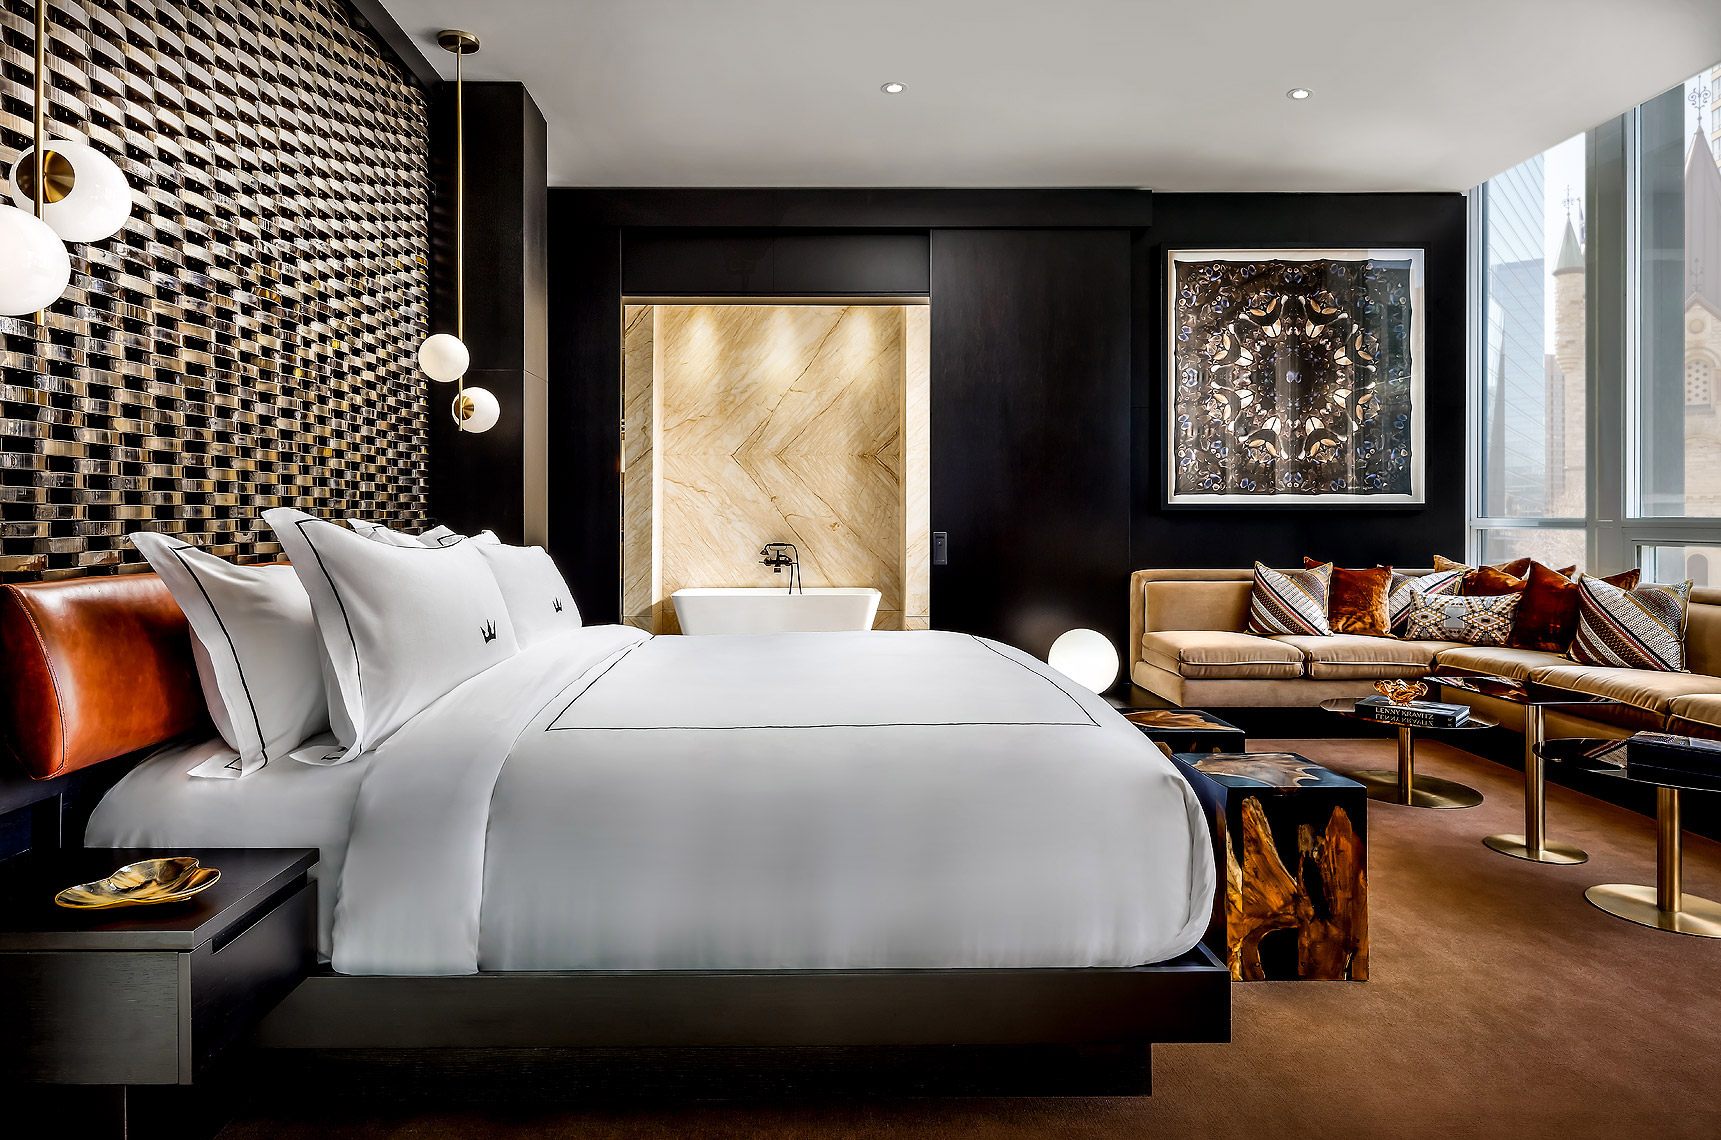 Bisha Hotel, Toronto - Presidential Suite Bedroom - Lenny Kravitz Design